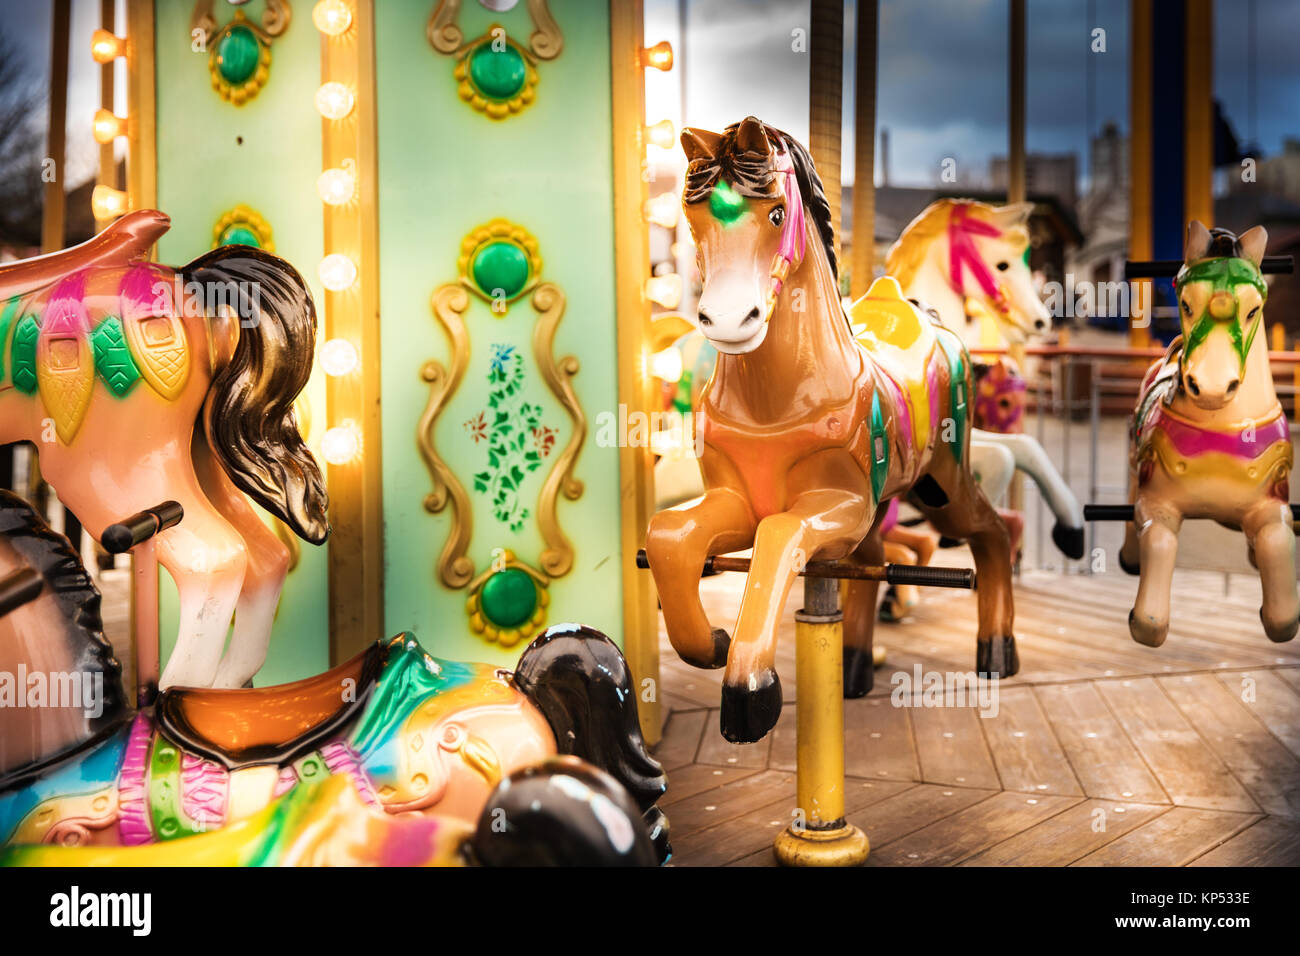 Merry go round carrousel cheval ride at amusement park Banque D'Images